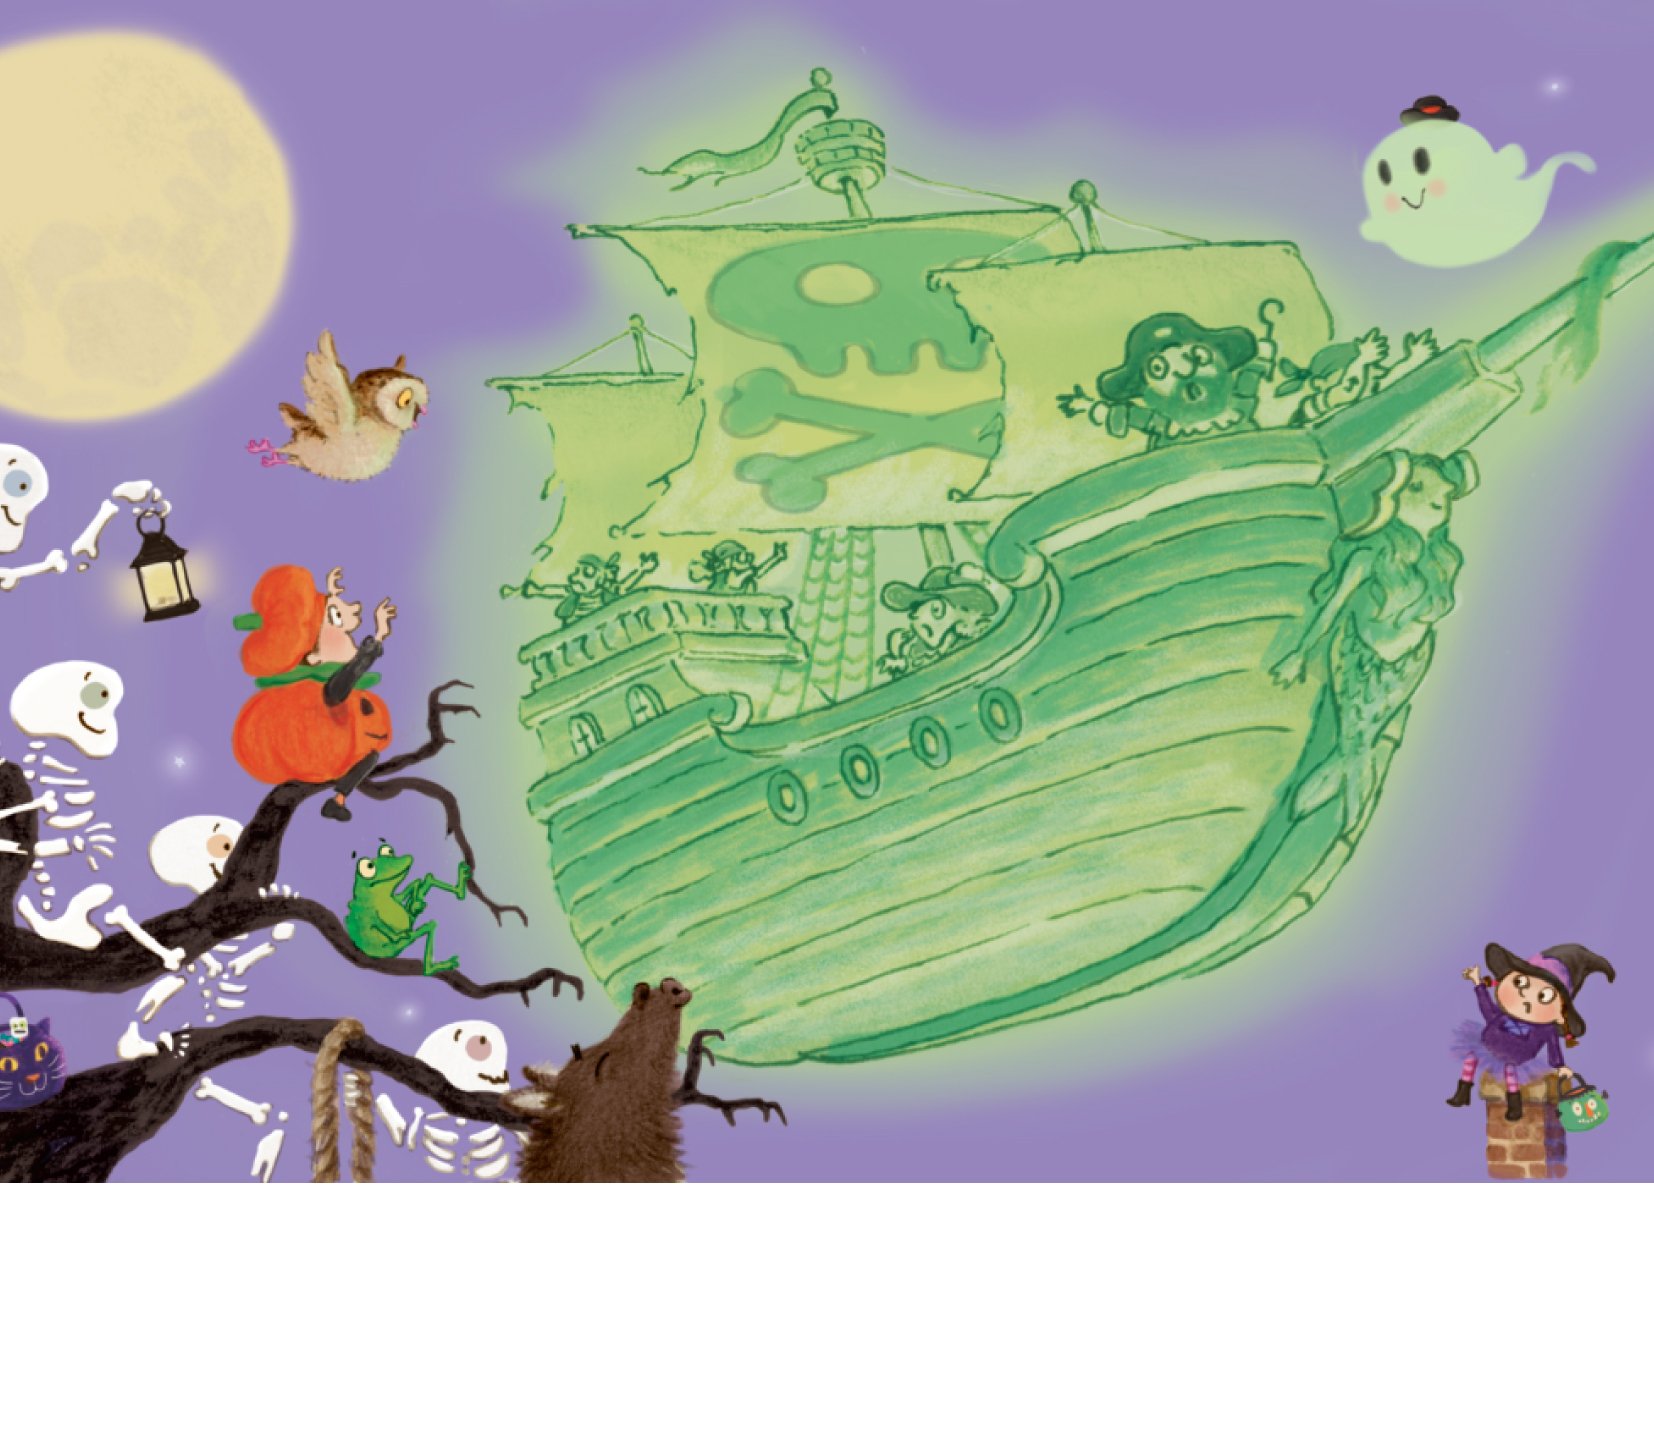 paul-howard-ghost-pirates-illustration.jpg